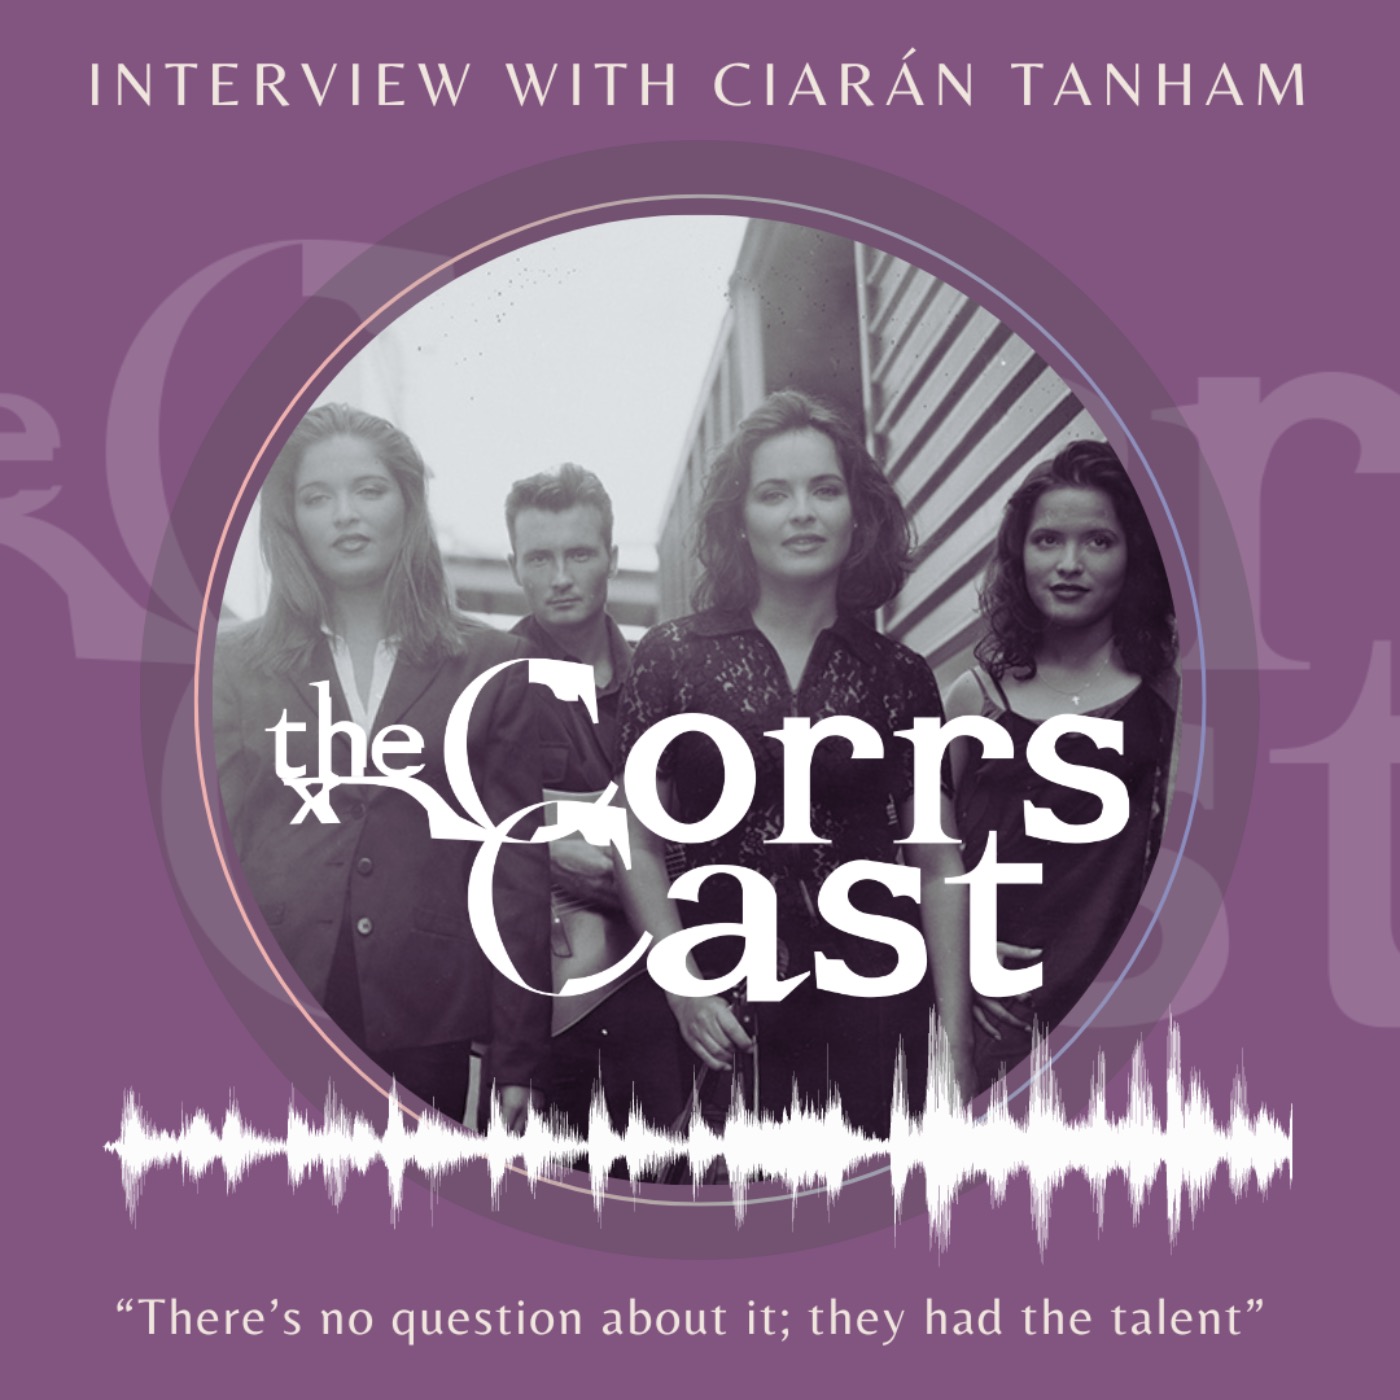 Interview with Ciarán Tanham